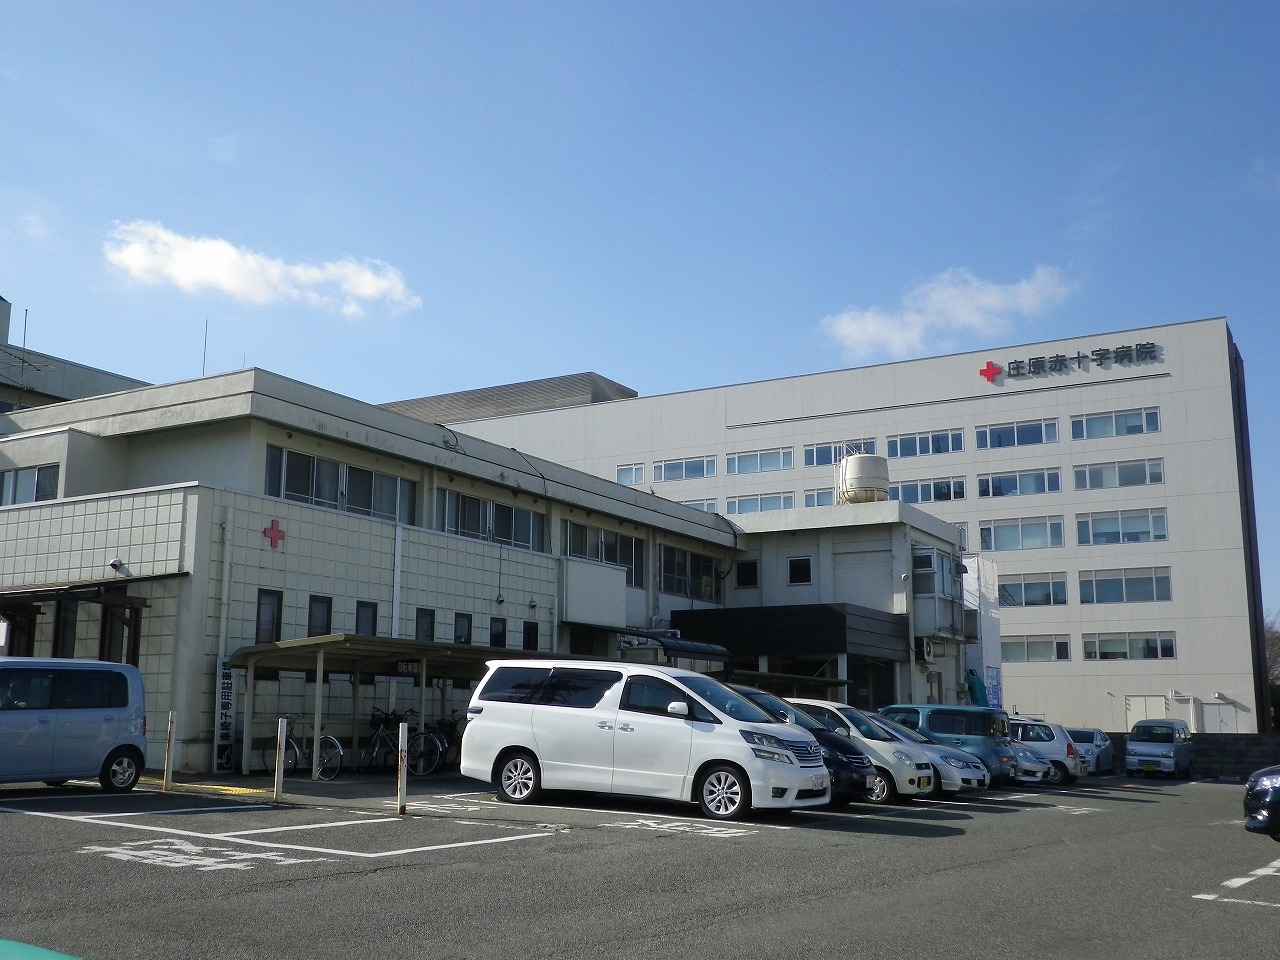 Hospital. 1224m to the General Hospital Shobara Red Cross Hospital (Hospital)